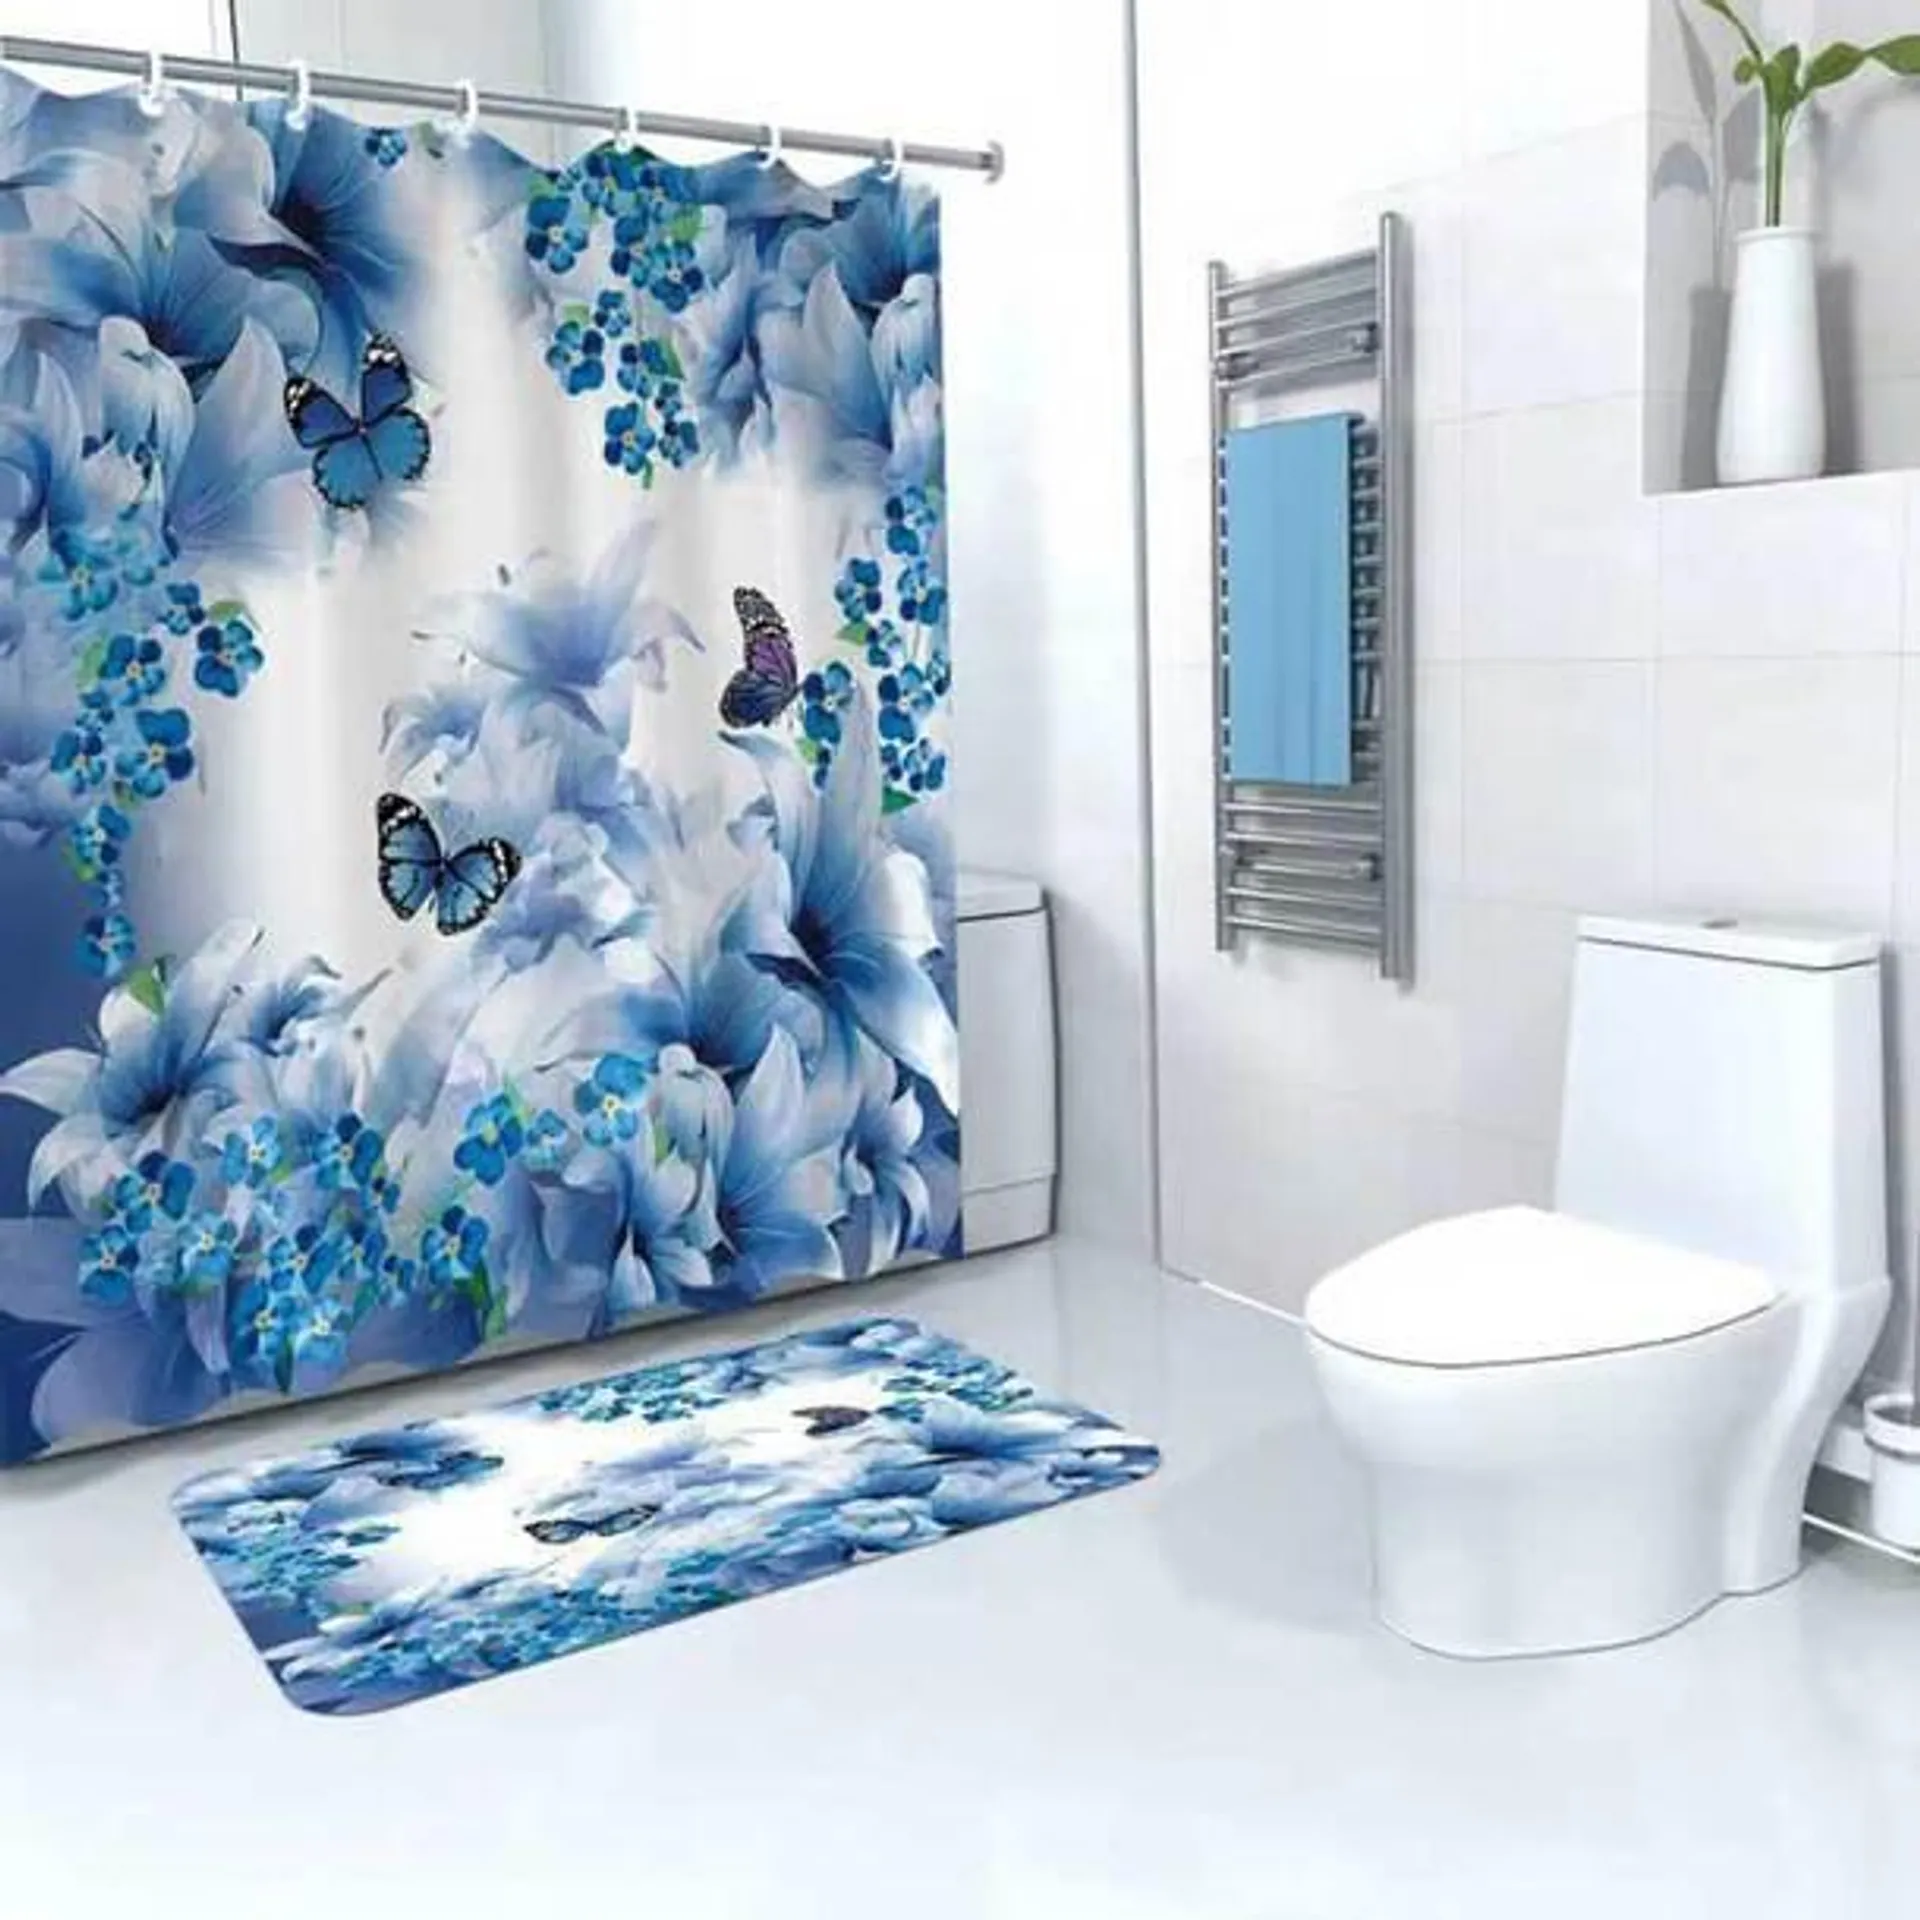 Mould-Proof Shower Curtain + FREE Bathmat